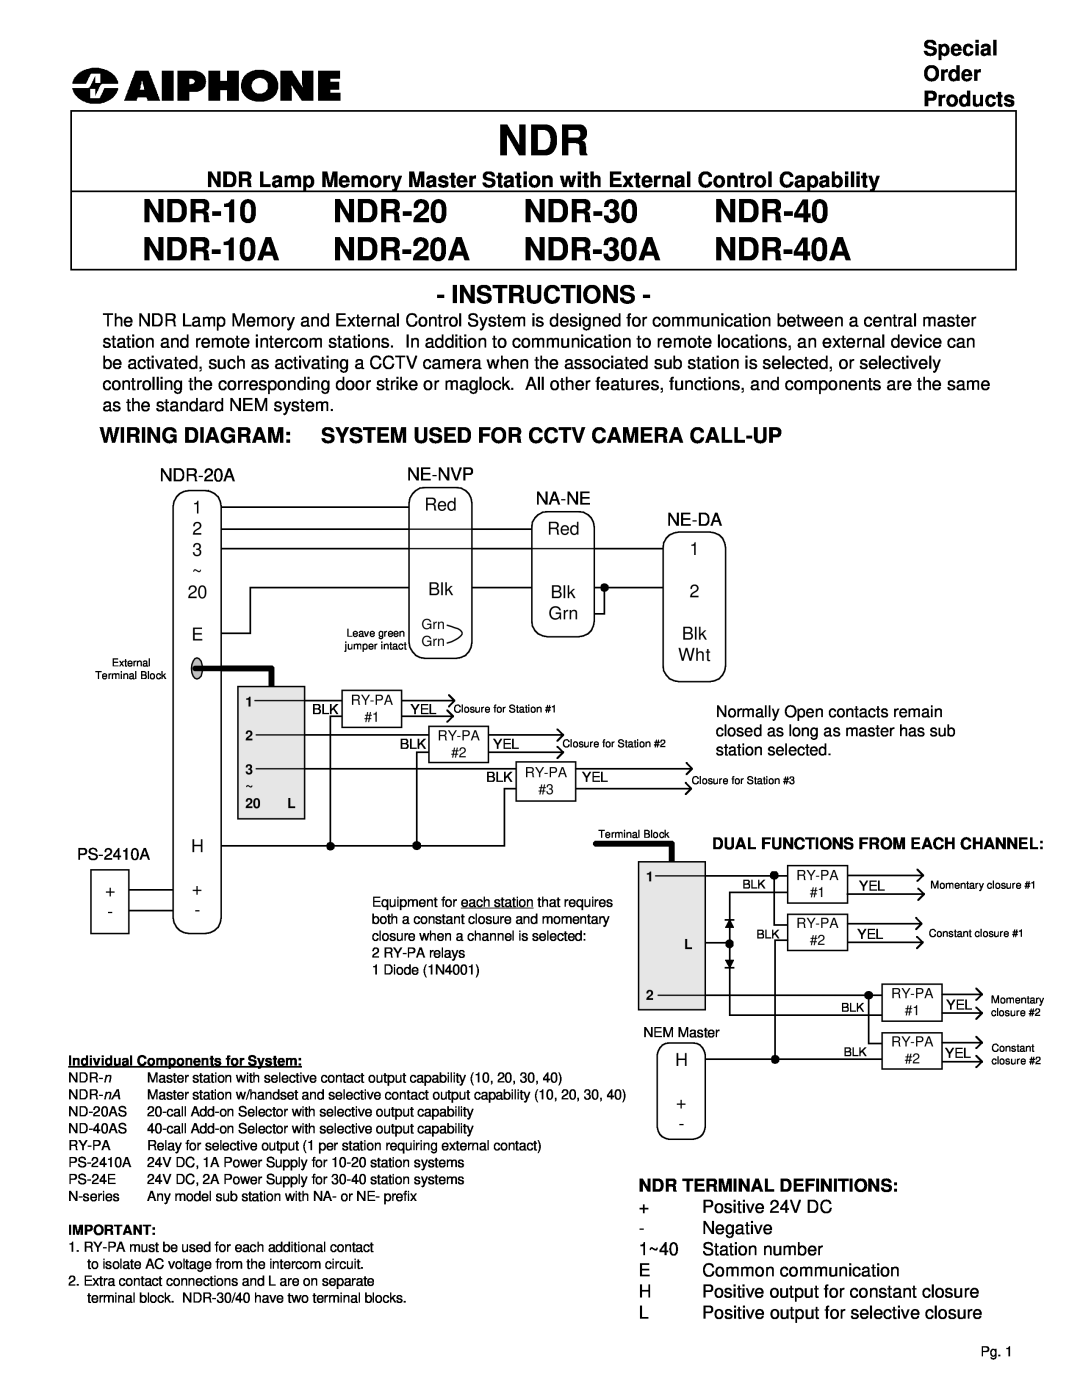 Aiphone manual NDR-10 NDR-20 NDR-30 NDR-40, NDR-10A NDR-20A NDR-30A NDR-40A, Instructions 